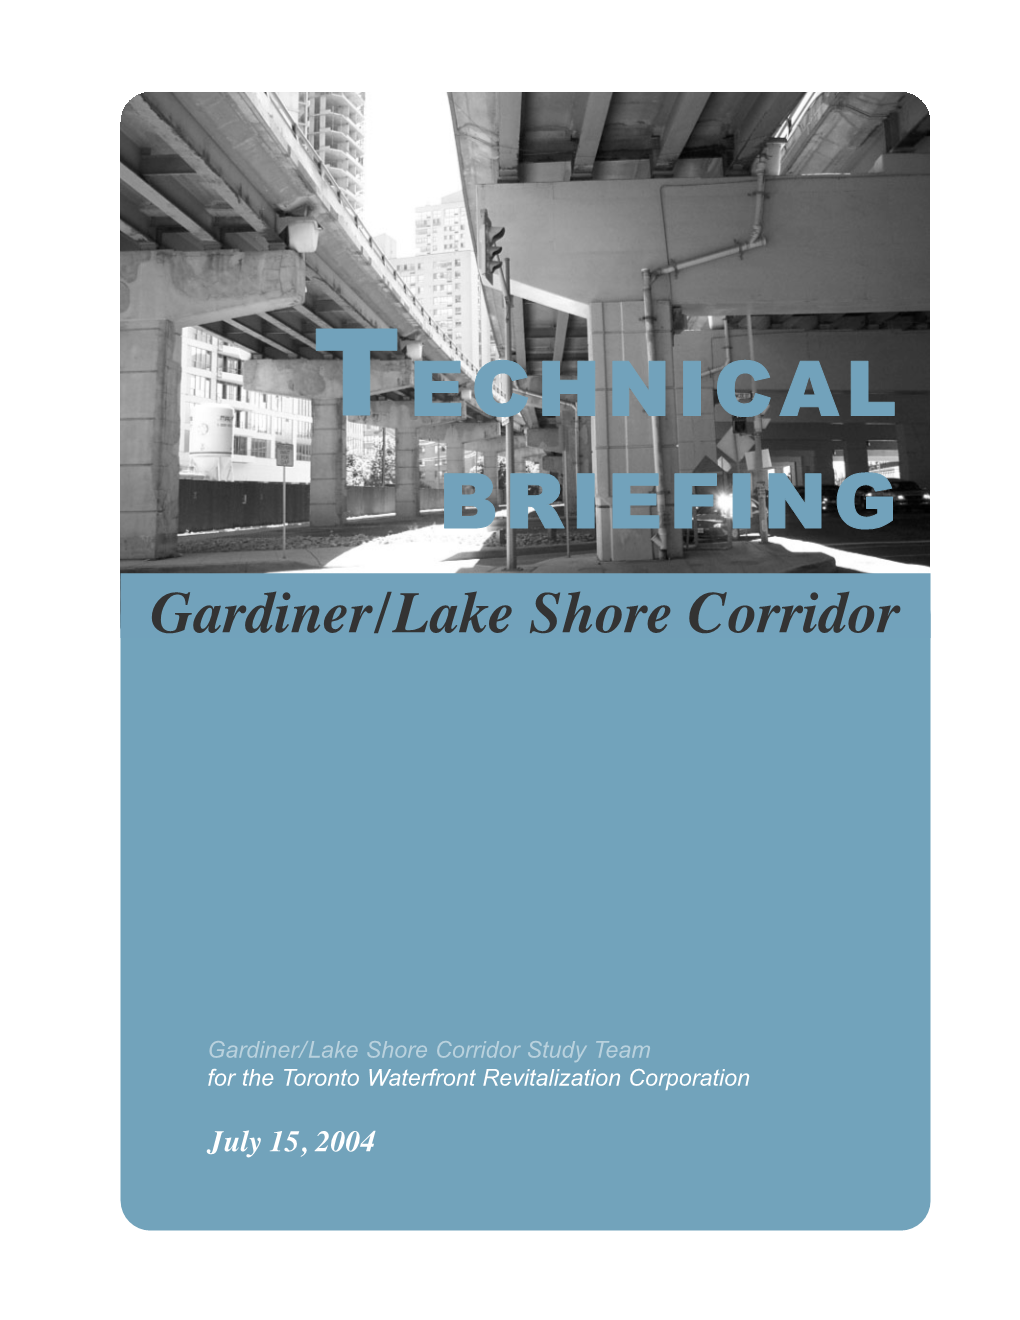 Gardiner Lake Shore Corridor Technical Report